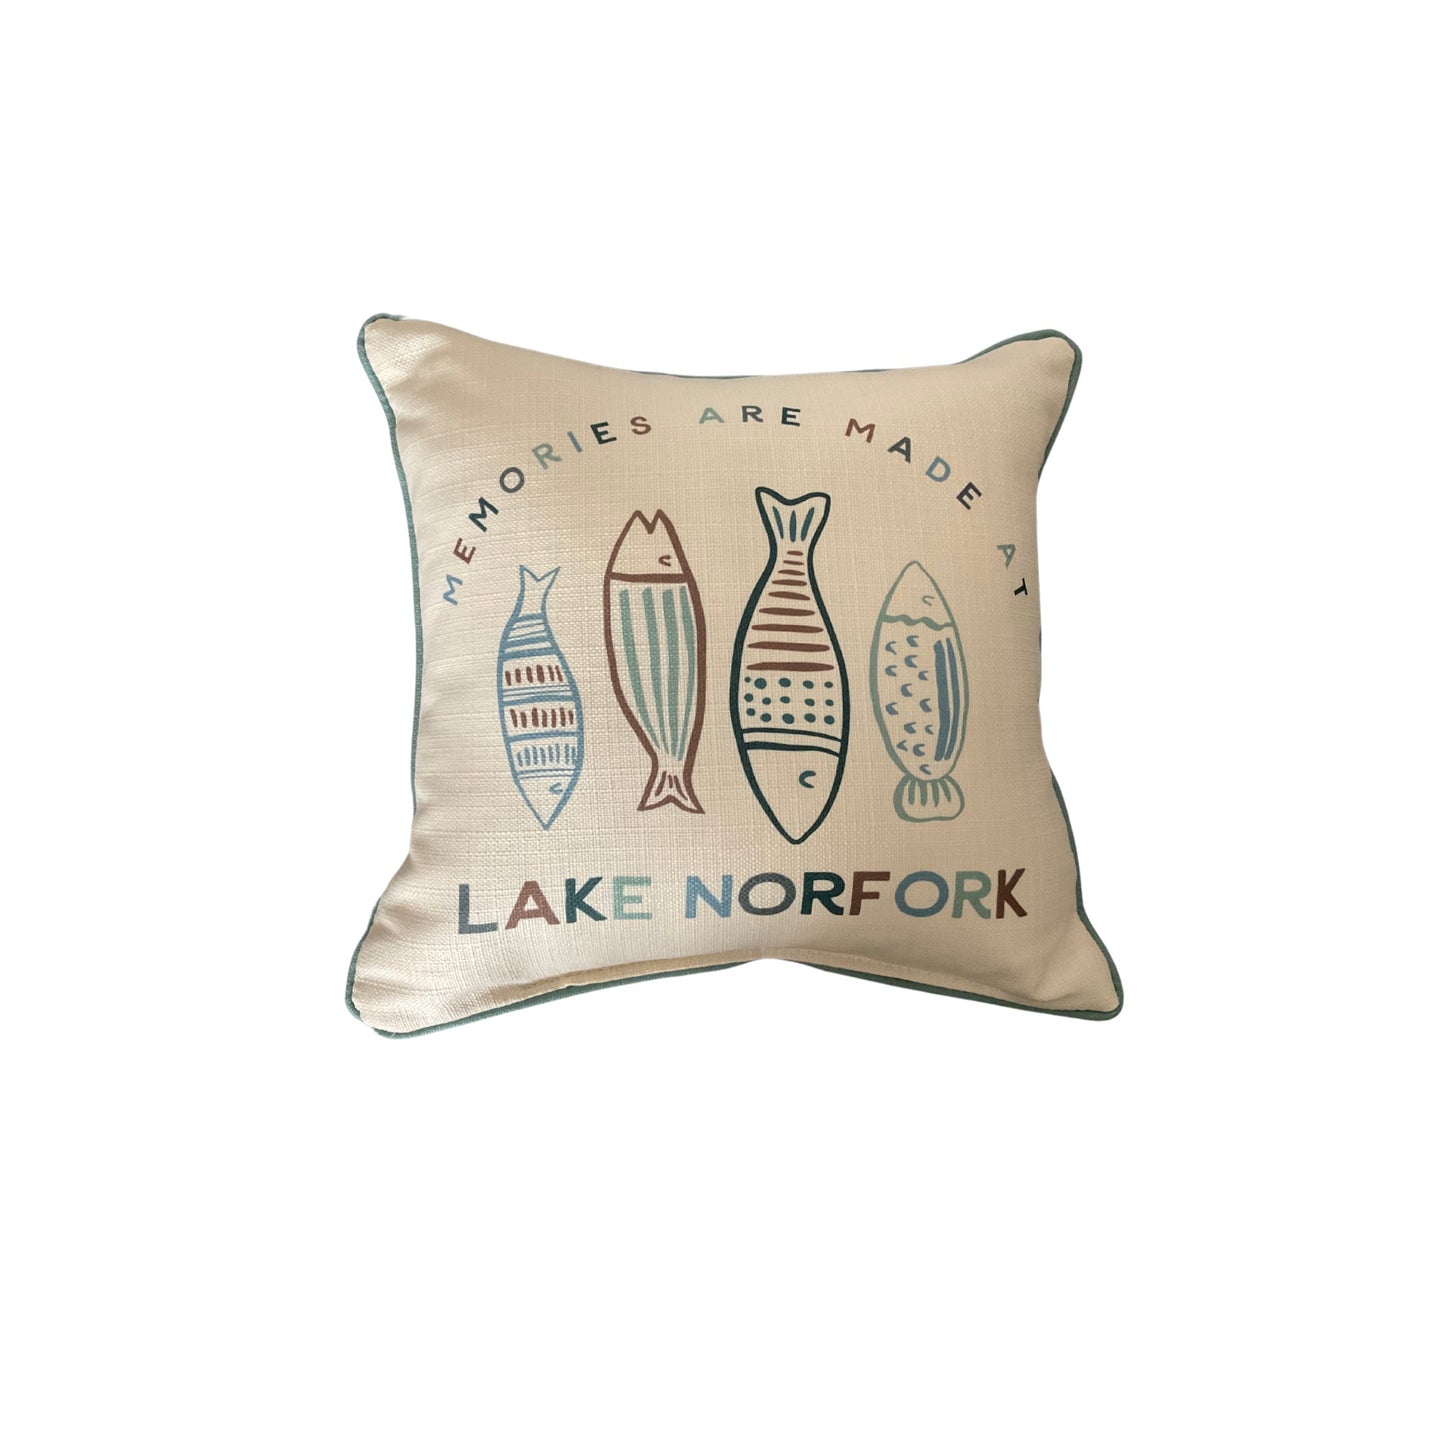 Memories are Made at Lake Norfork Pillow- Custom Pillow